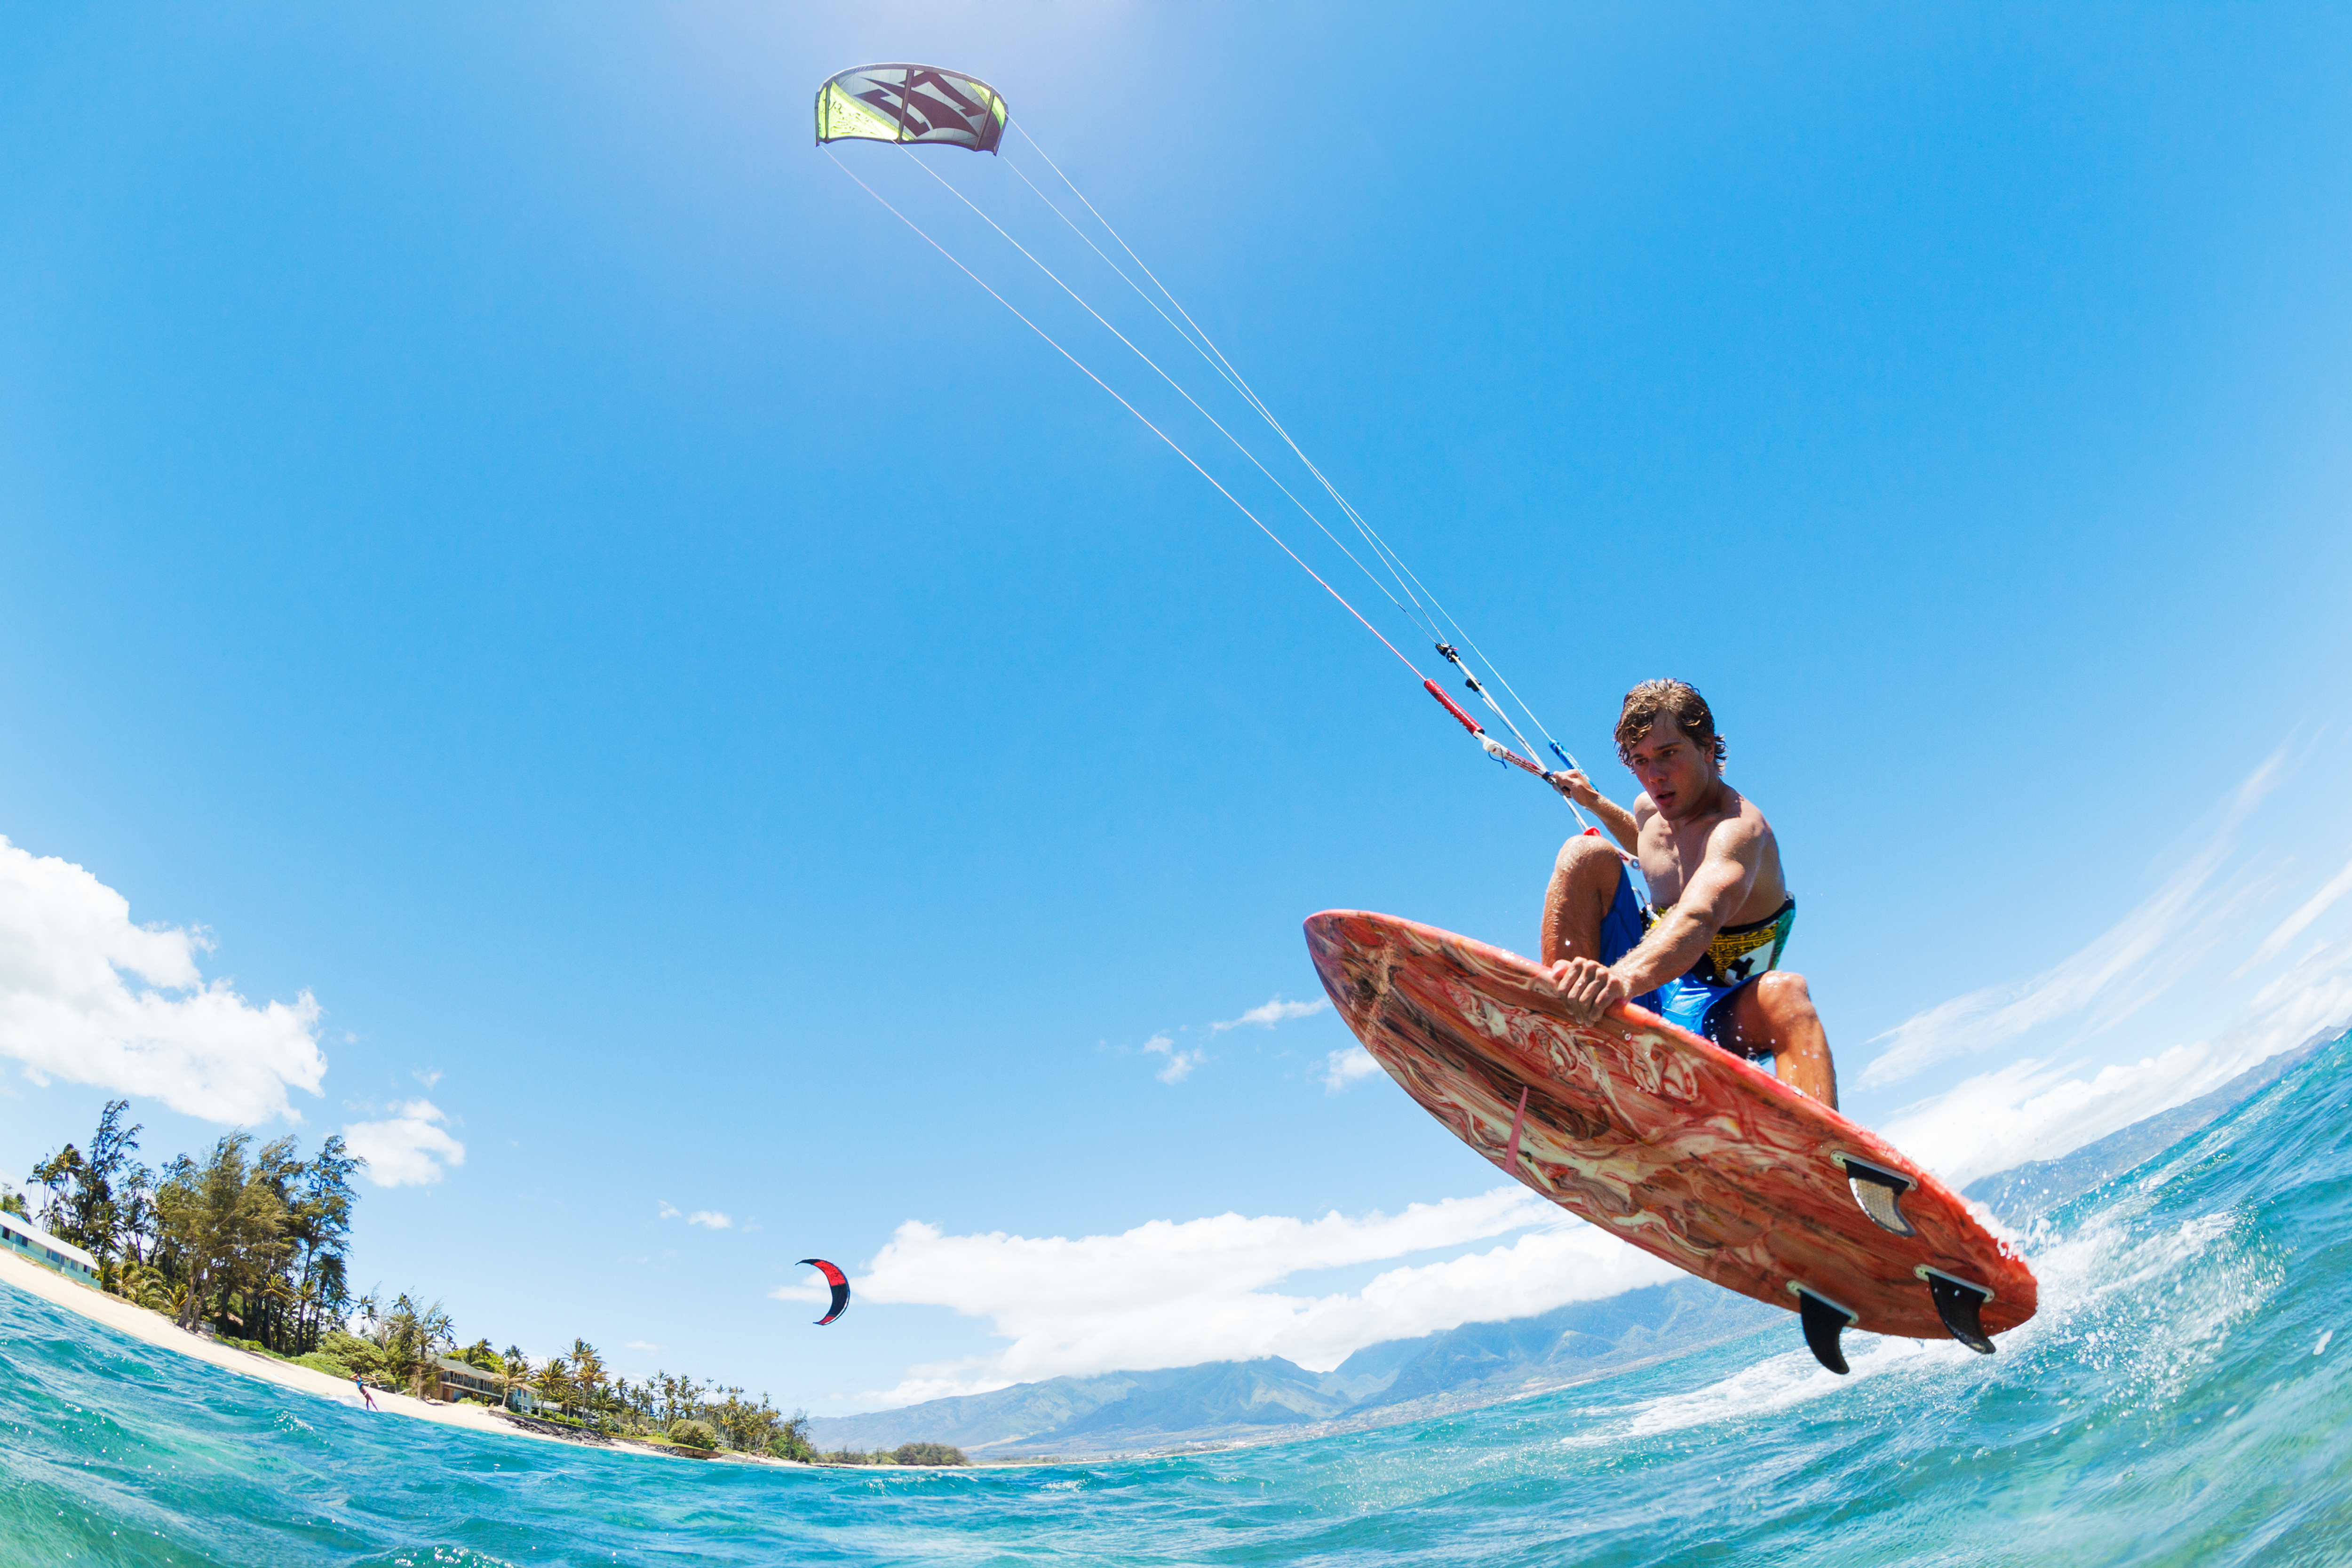 water sports when sailing: Kitesurfing